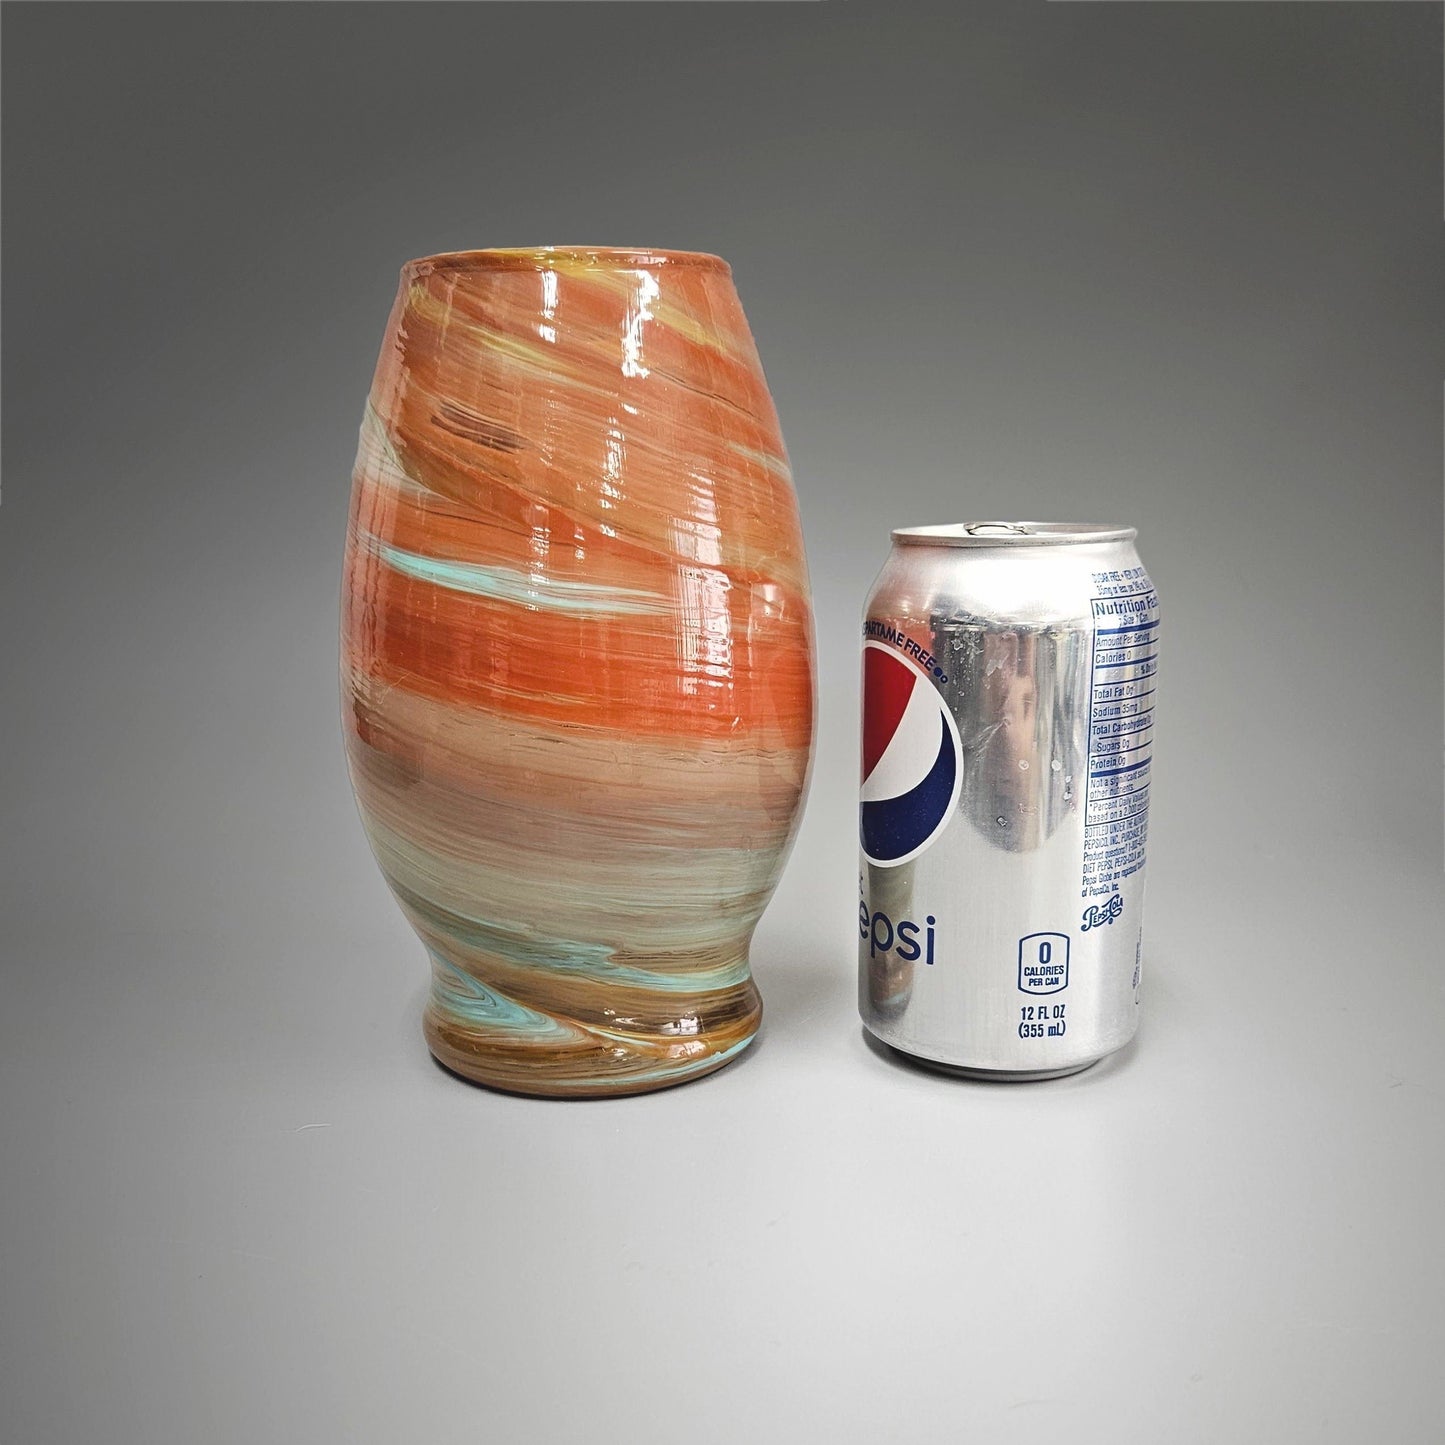 Fluid Art Painted Glass Vase in Terra Cotta